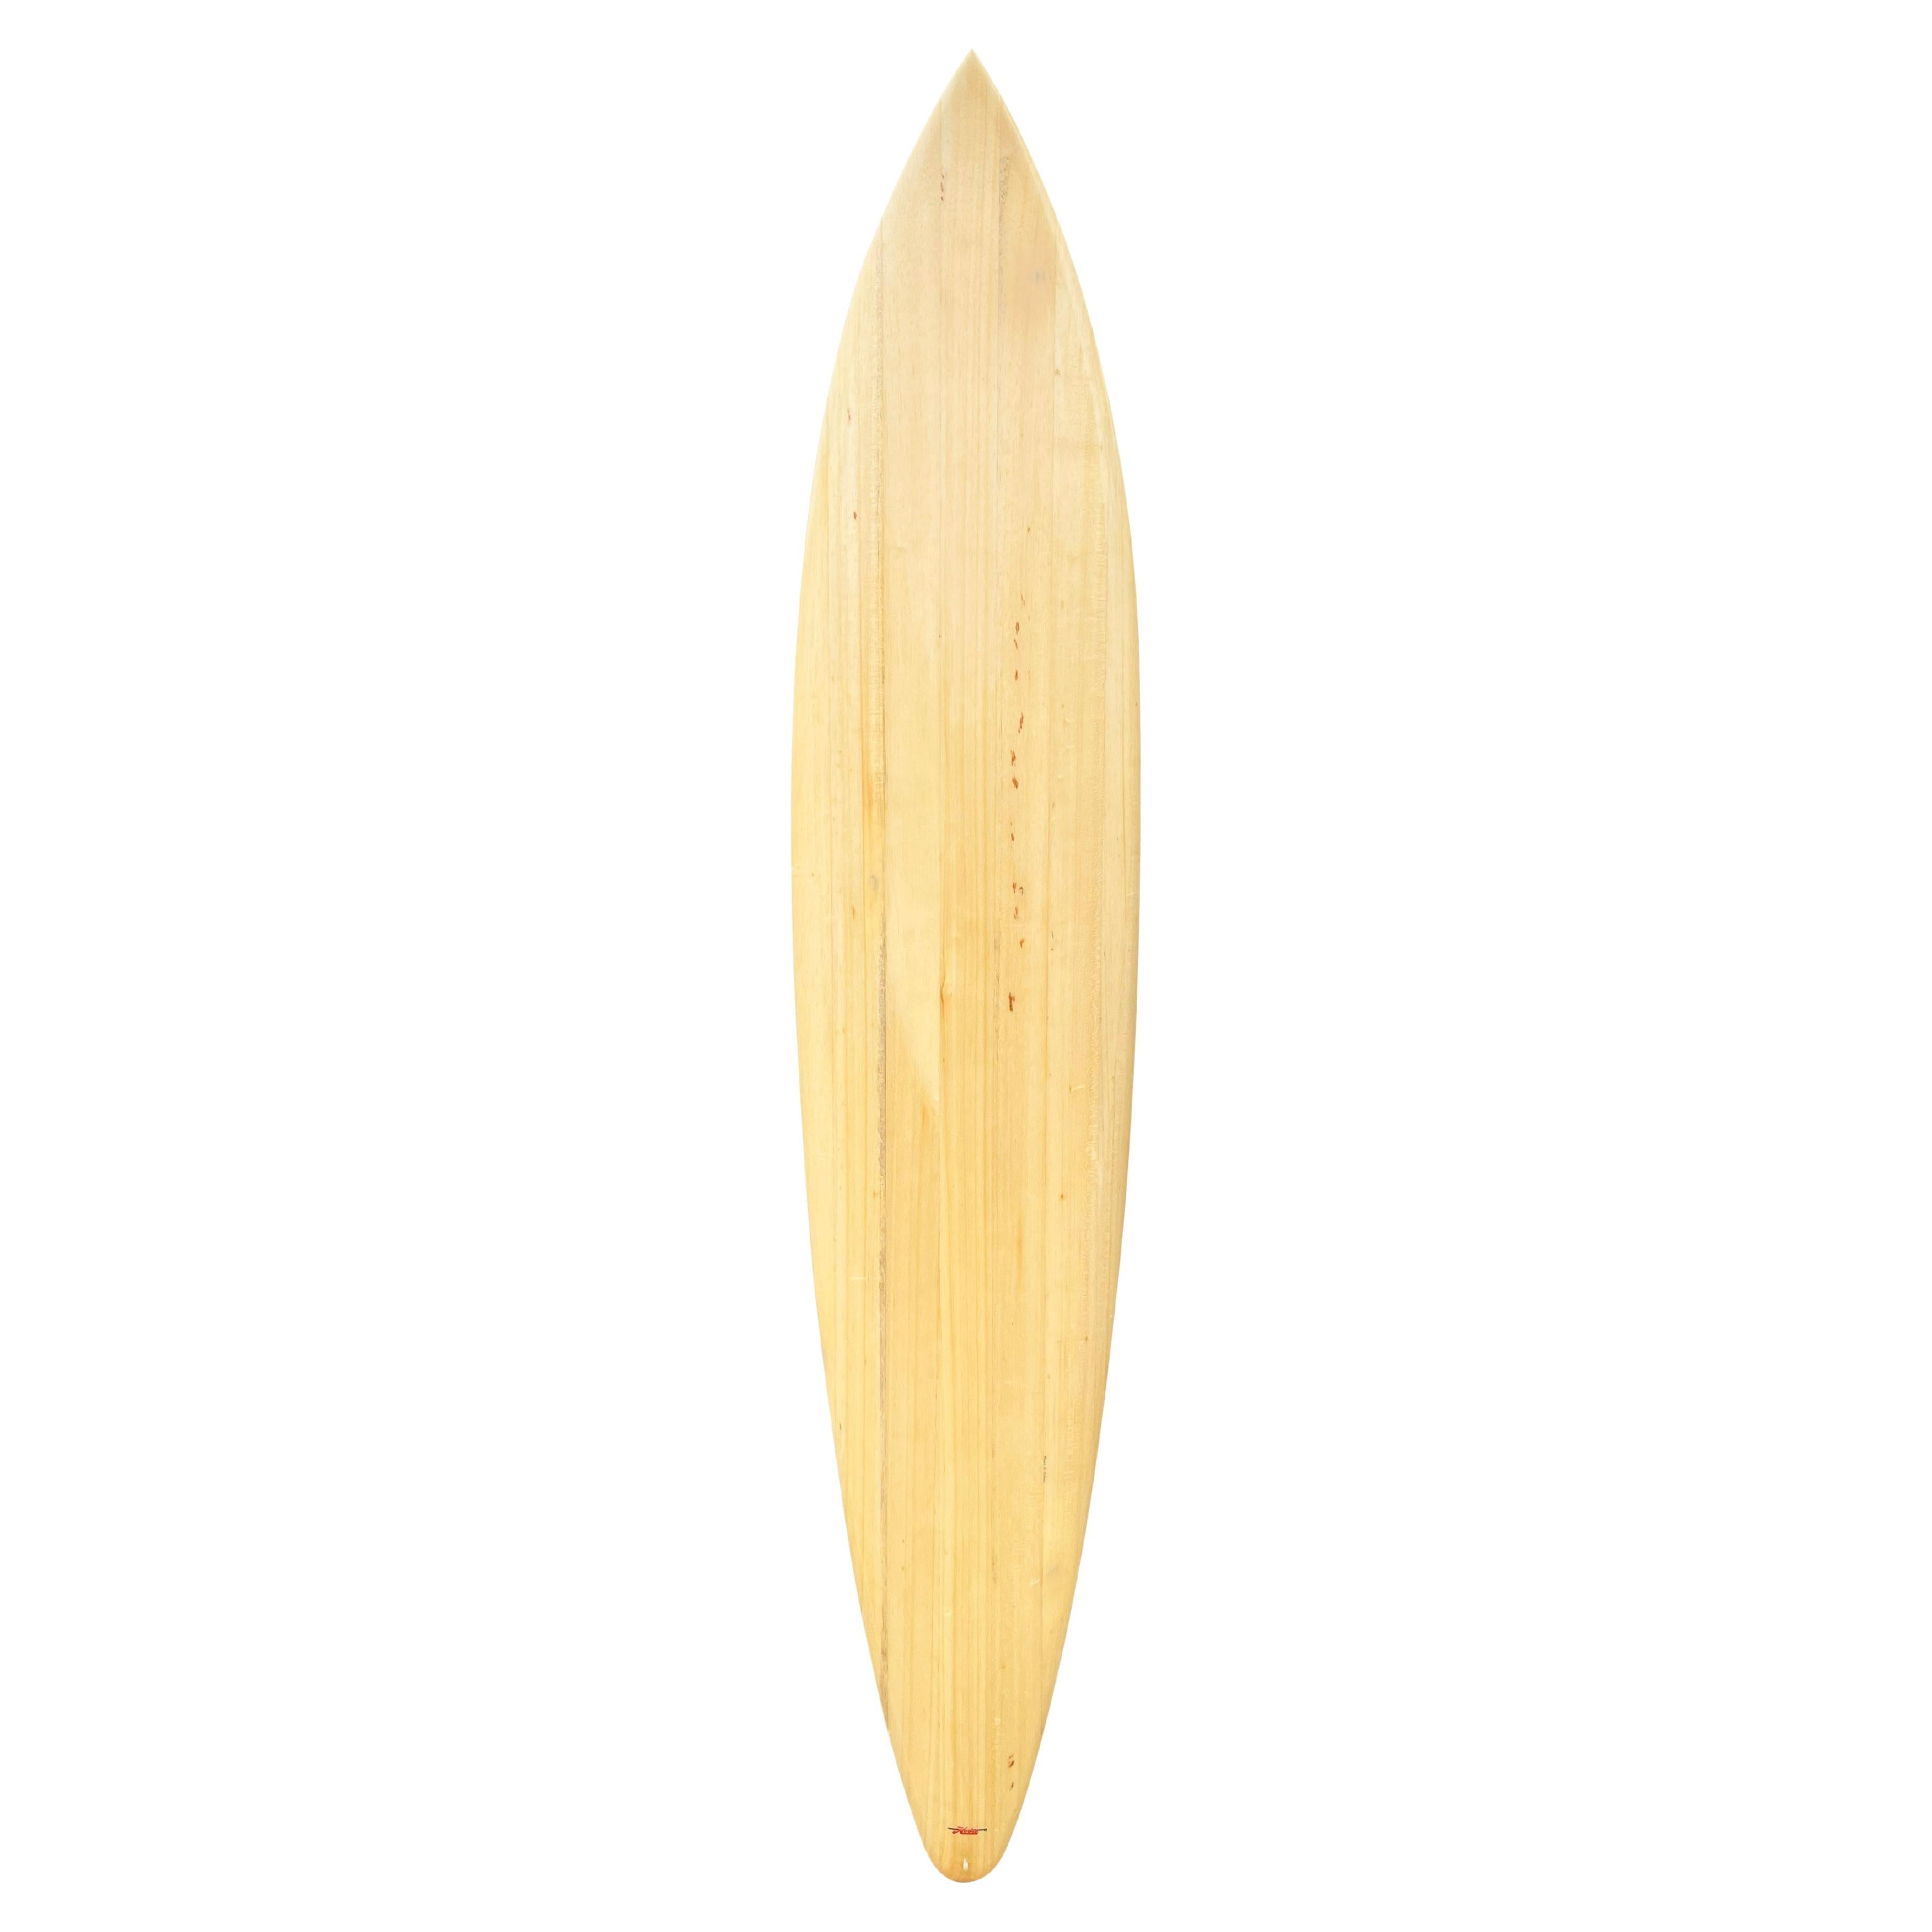 Vintage 1971 Hobie Surfboards balsawood surfboard by Mickey Muñoz